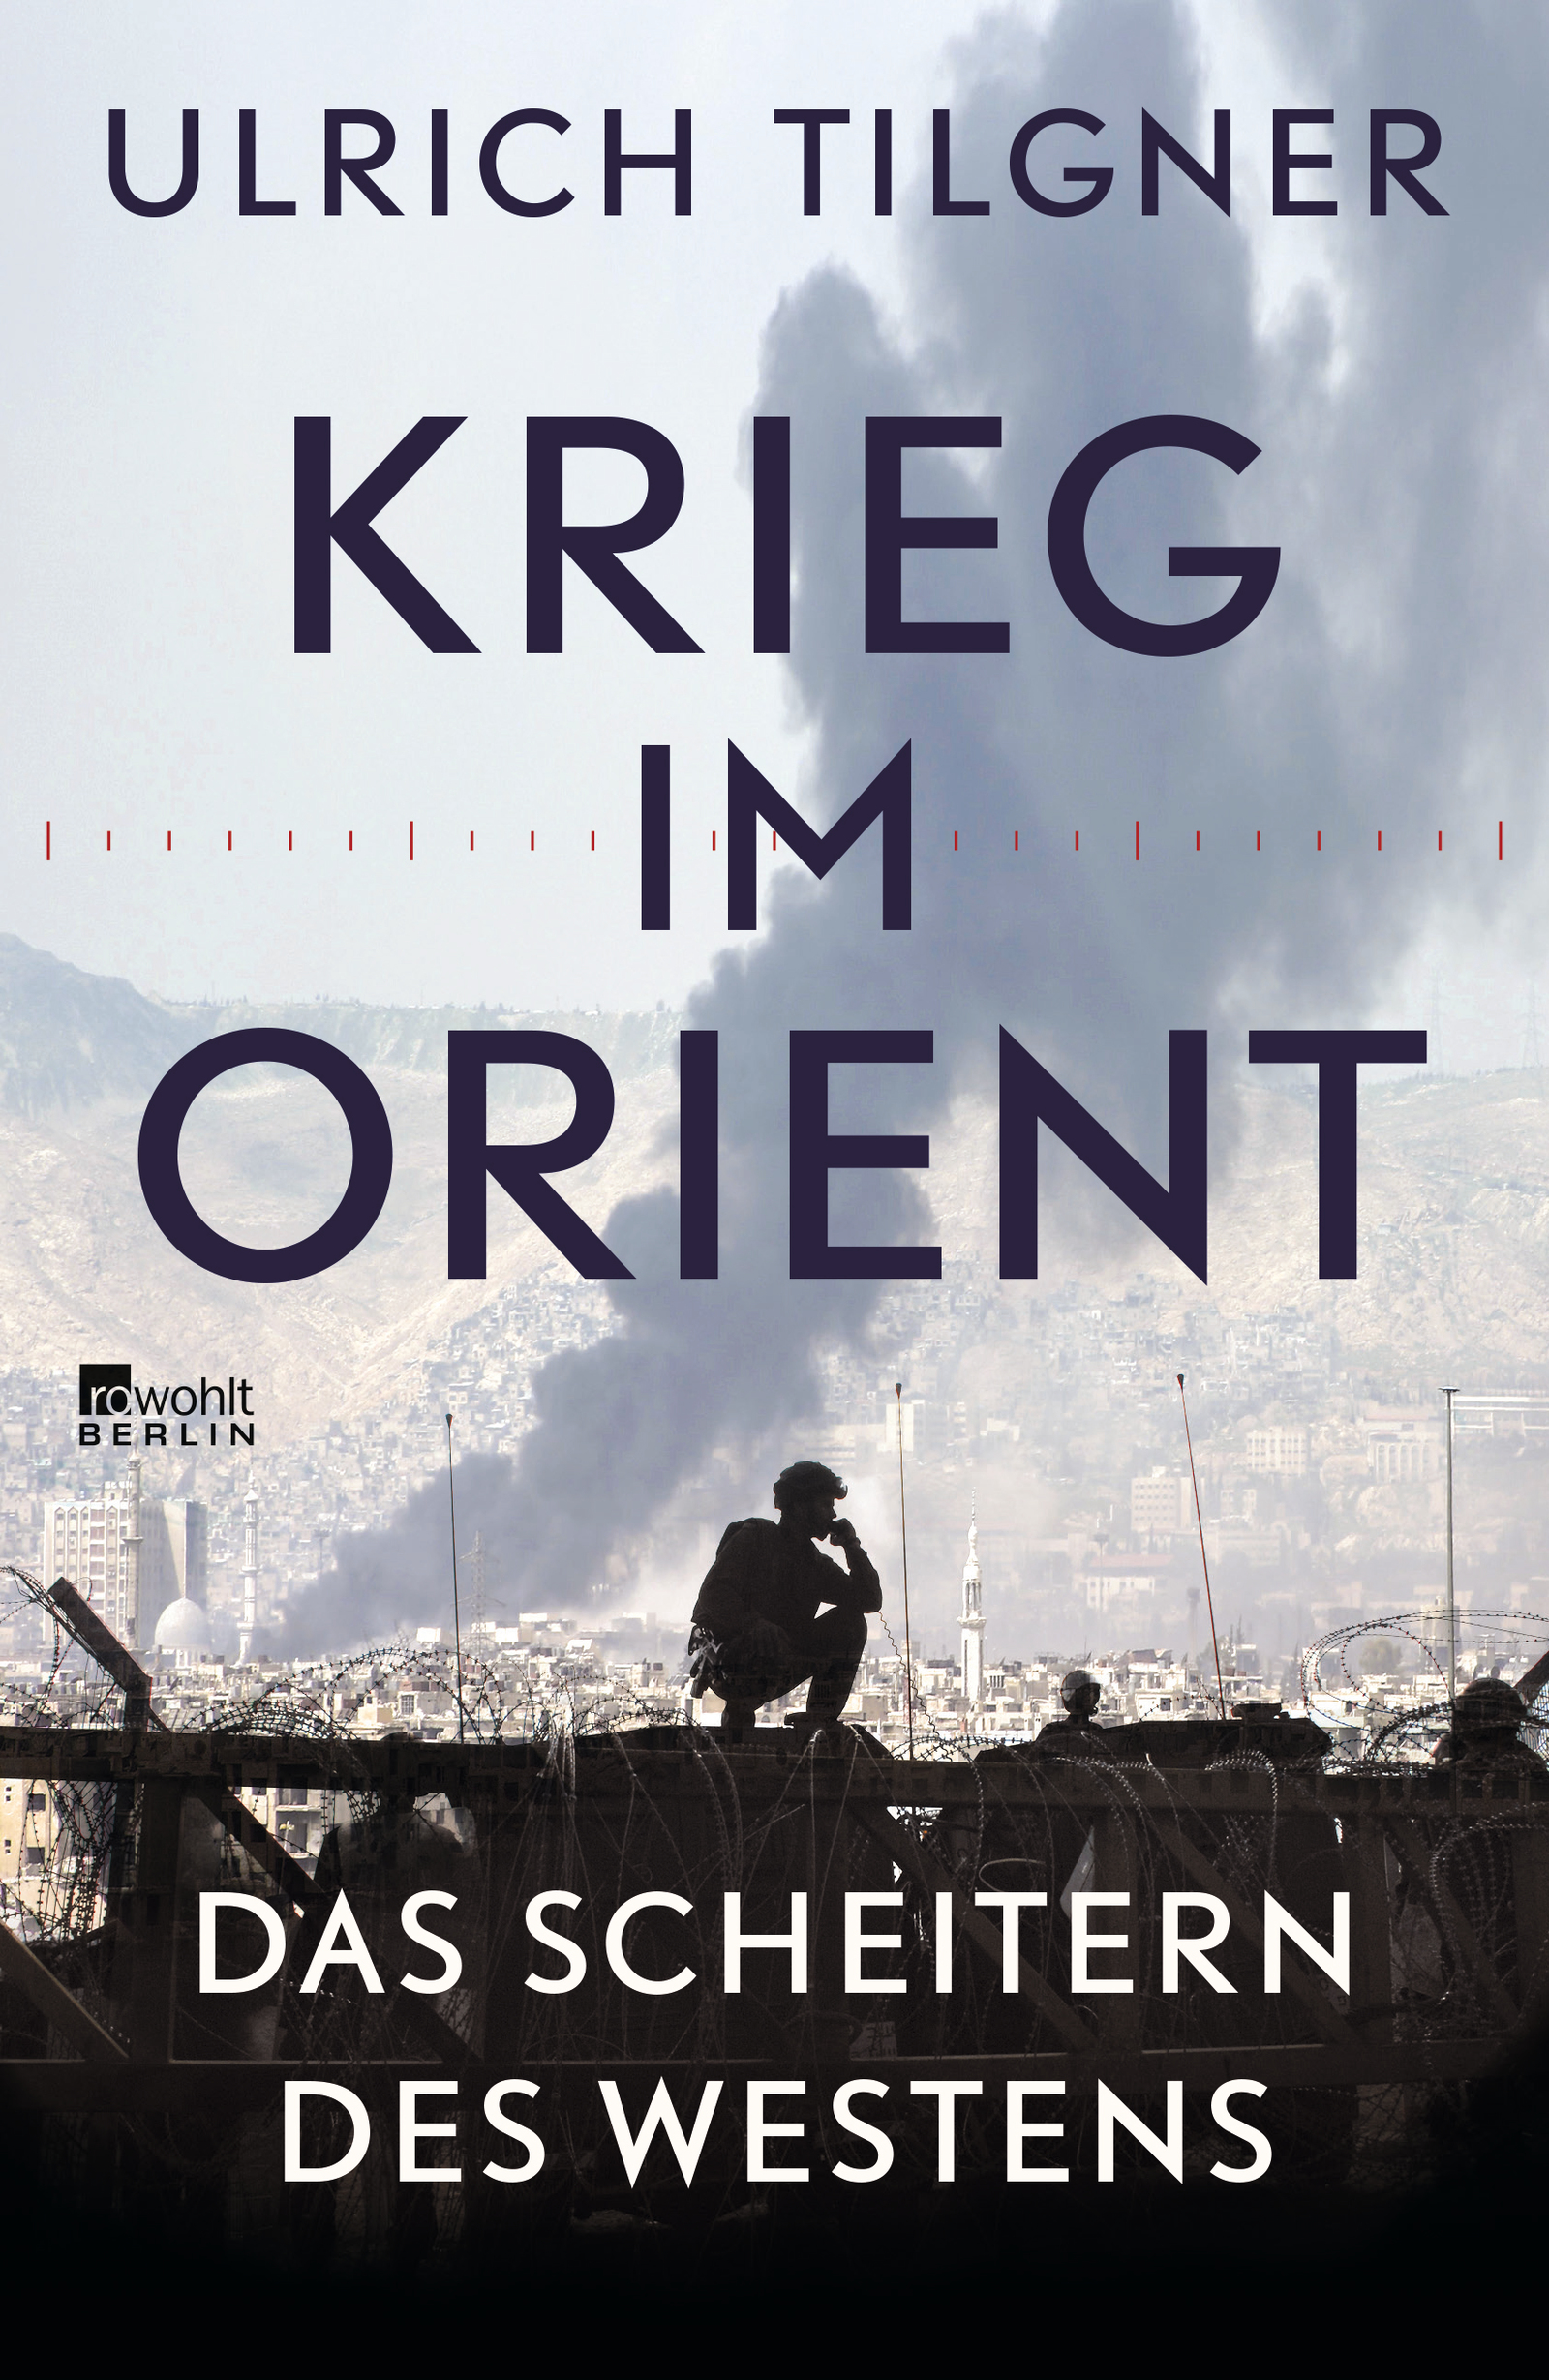 Buchcover Ulrich Tilgner "Krieg im Orient"; Foto: Rowohlt Verlag